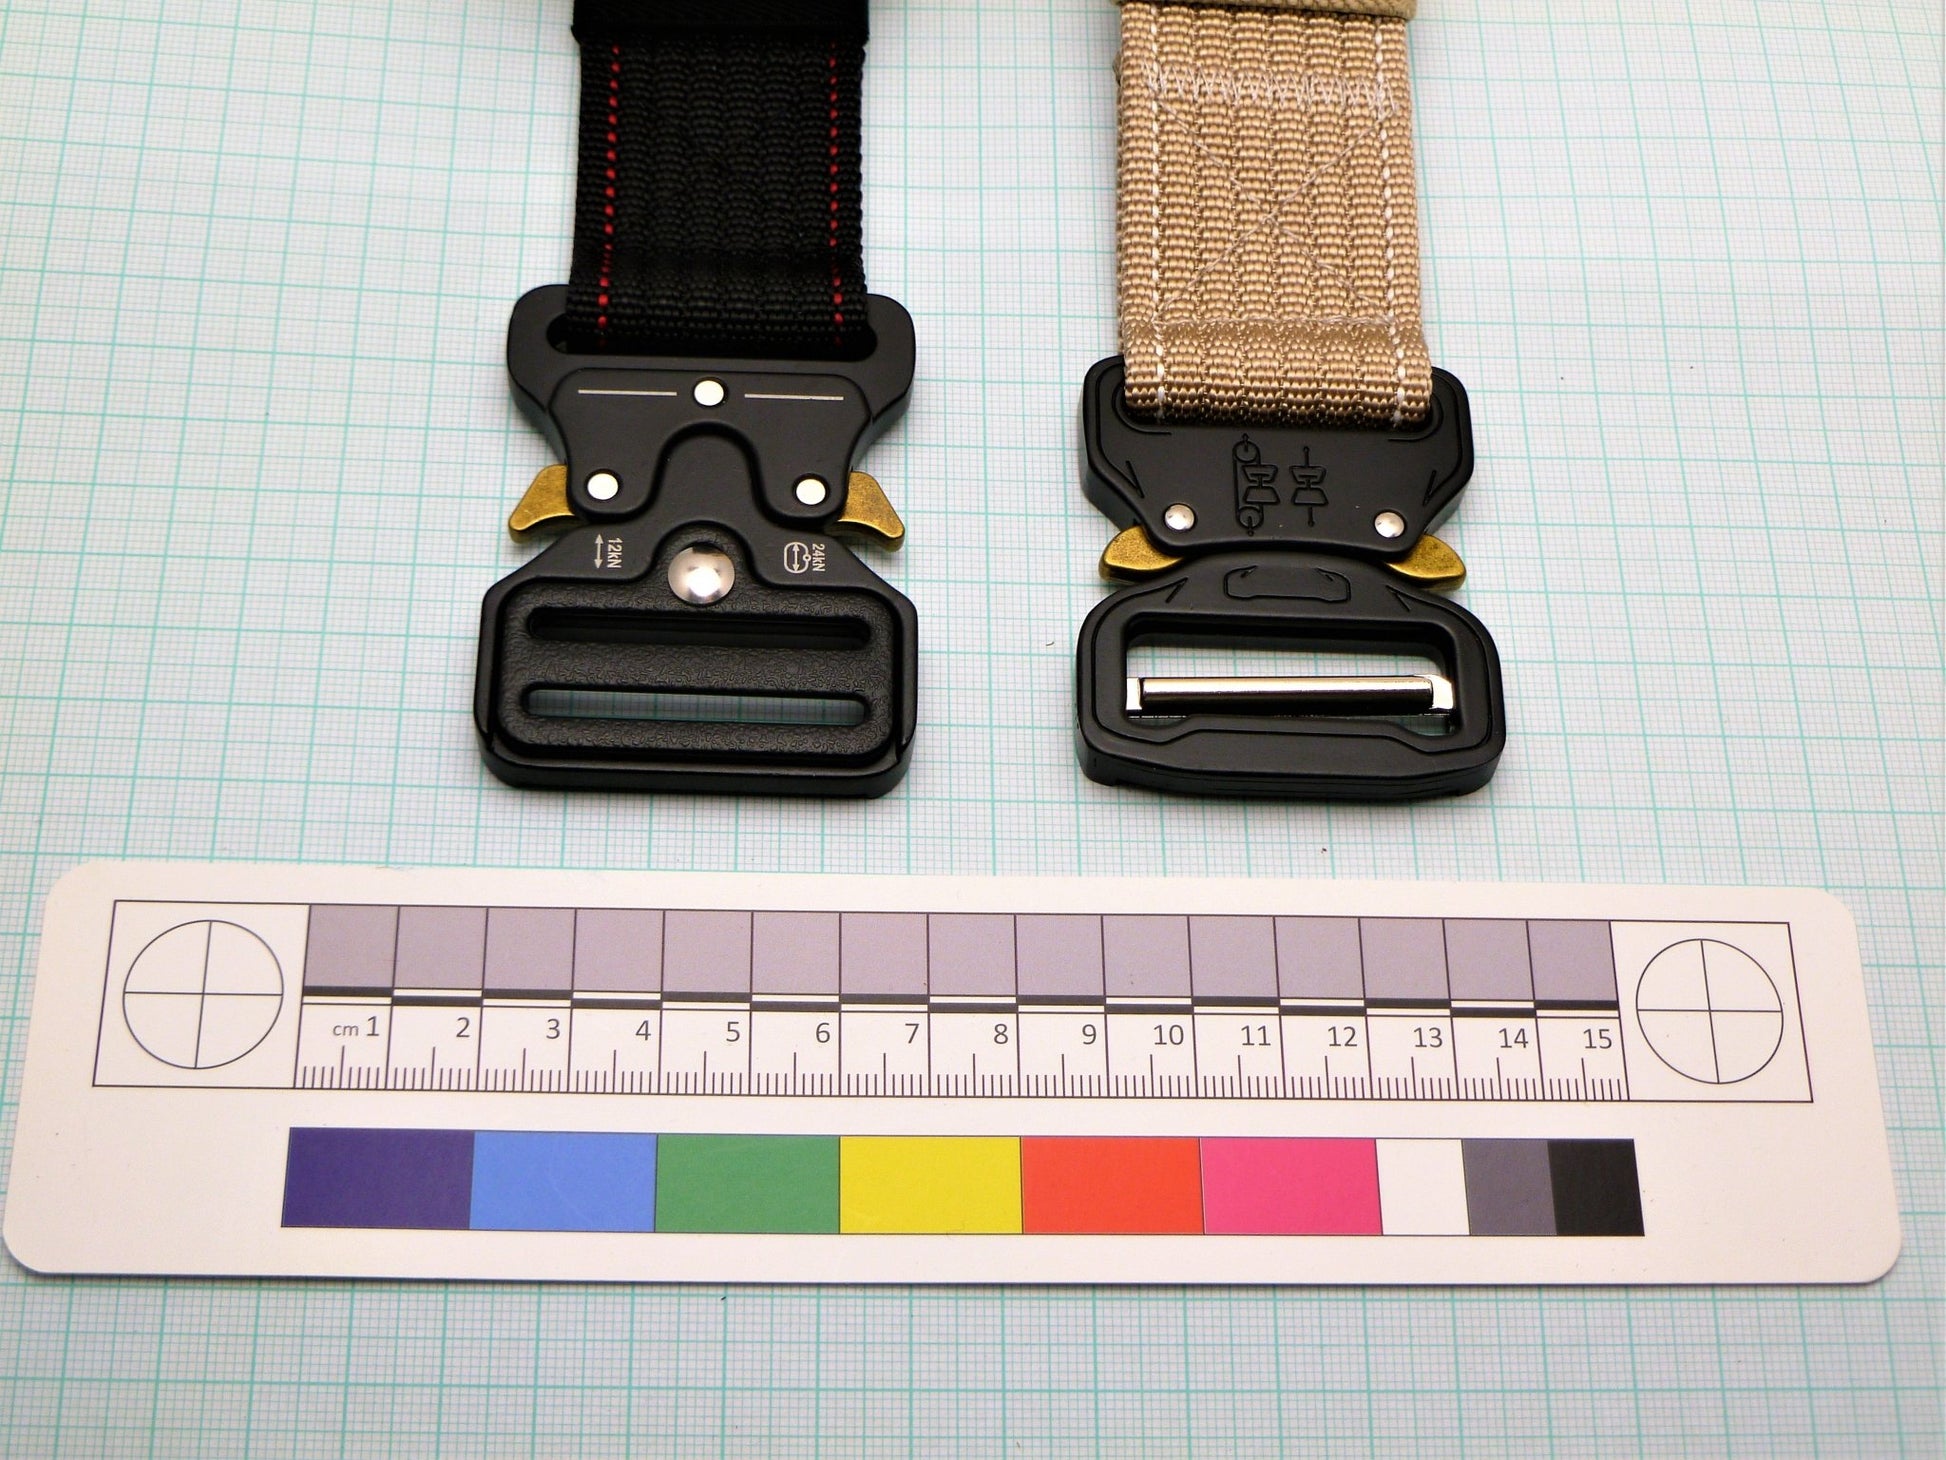 Quick Release Clasp Belt in Choice of 6 Colours  Huggins Attic    [Huggins attic]